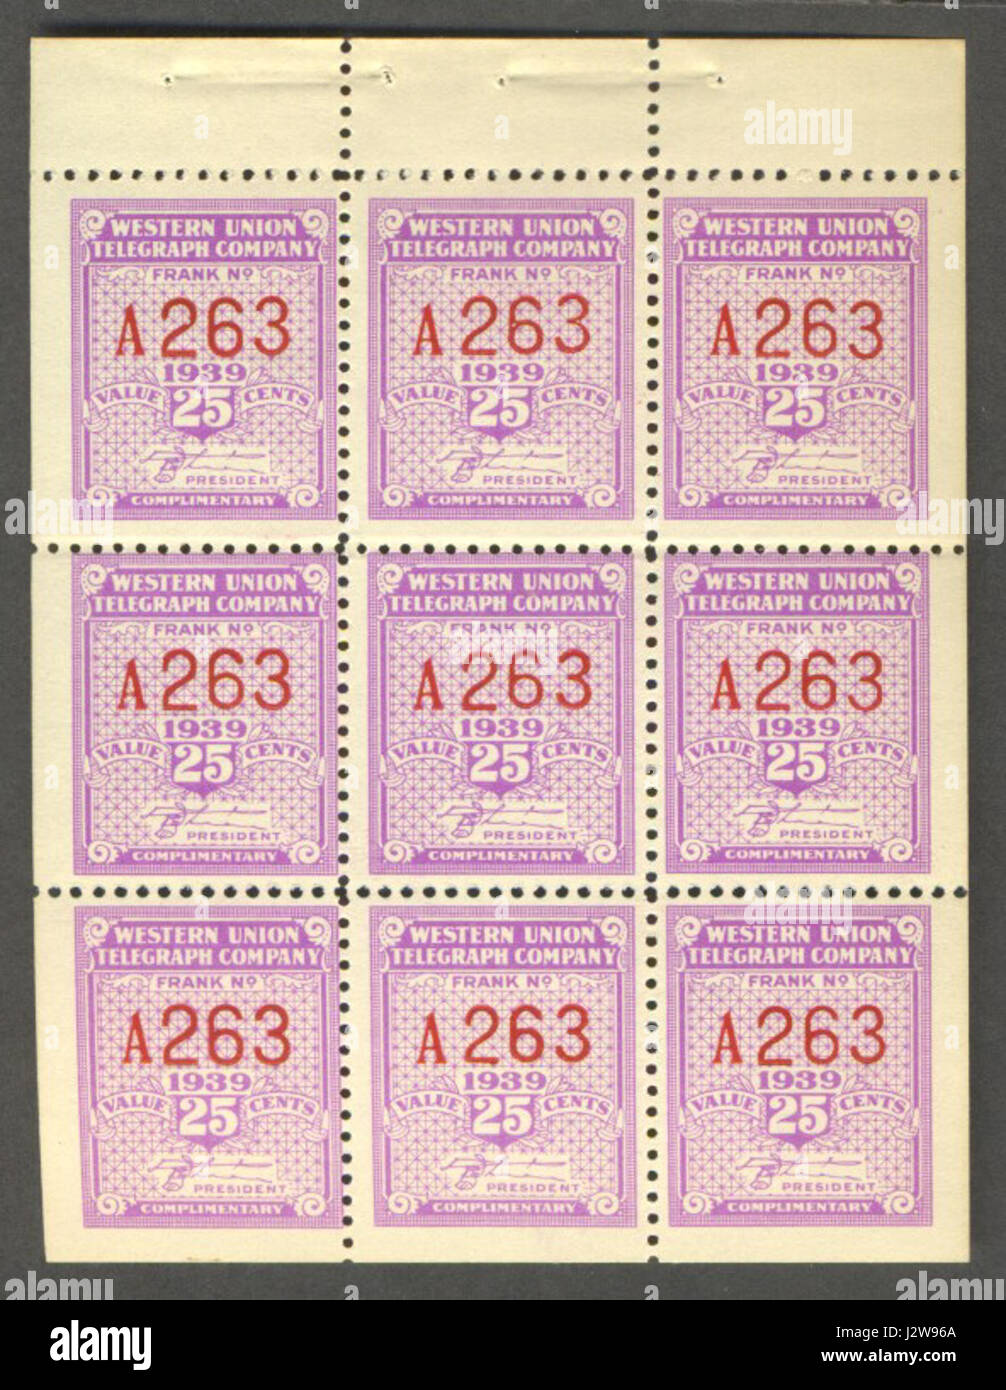 1939 Western Union telegraph stamp pane Stock Photo